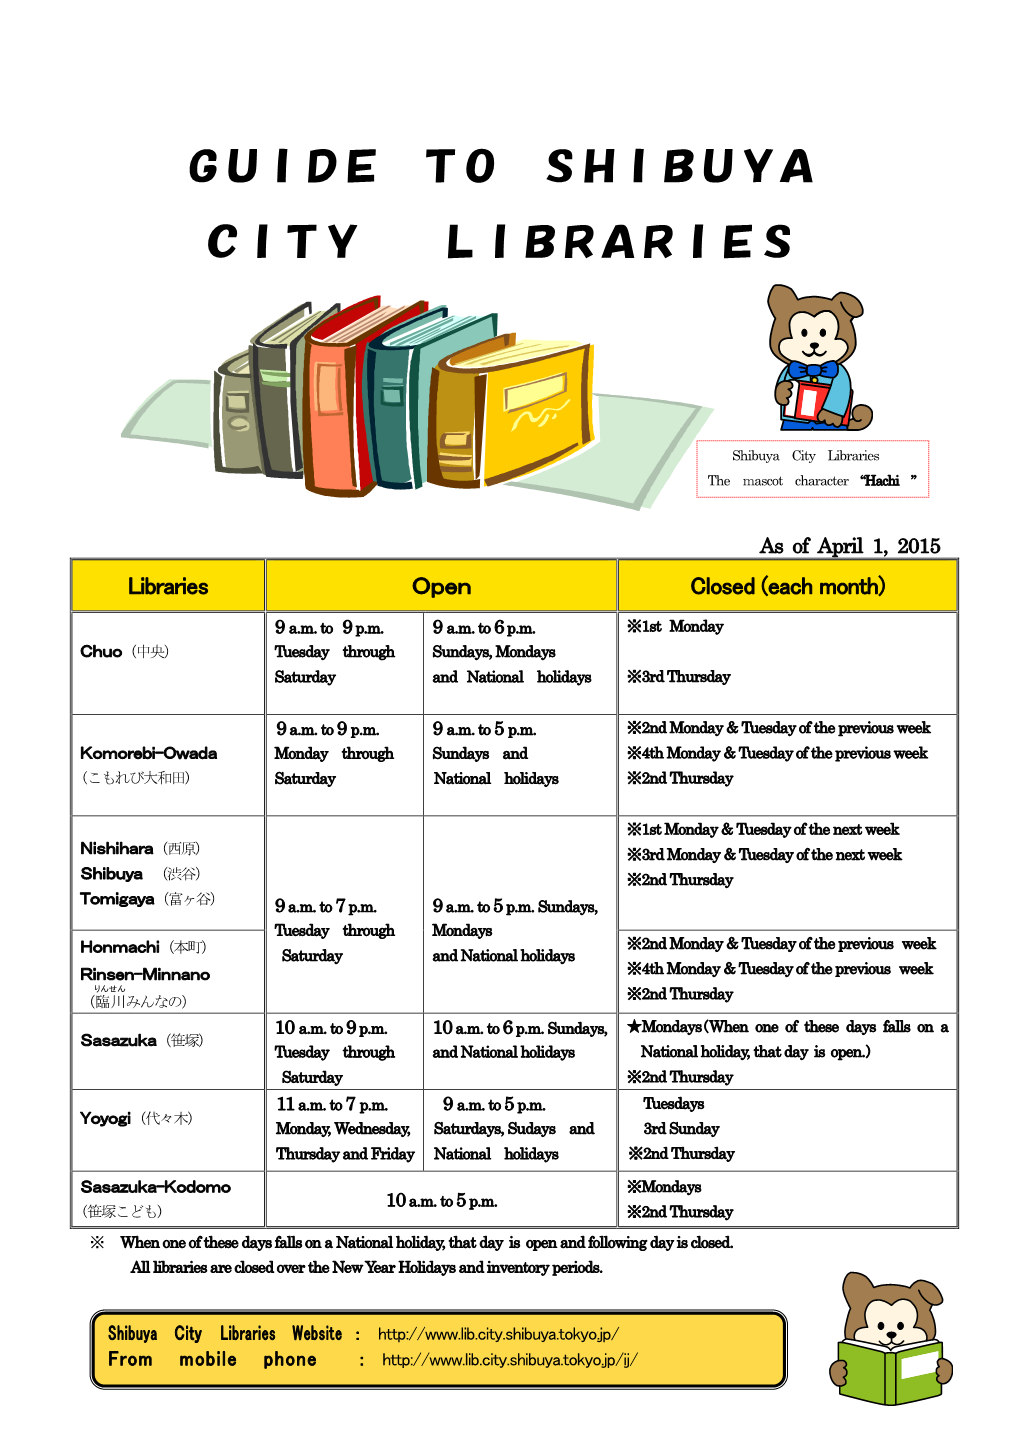 Guide to Shibuya City Libraries